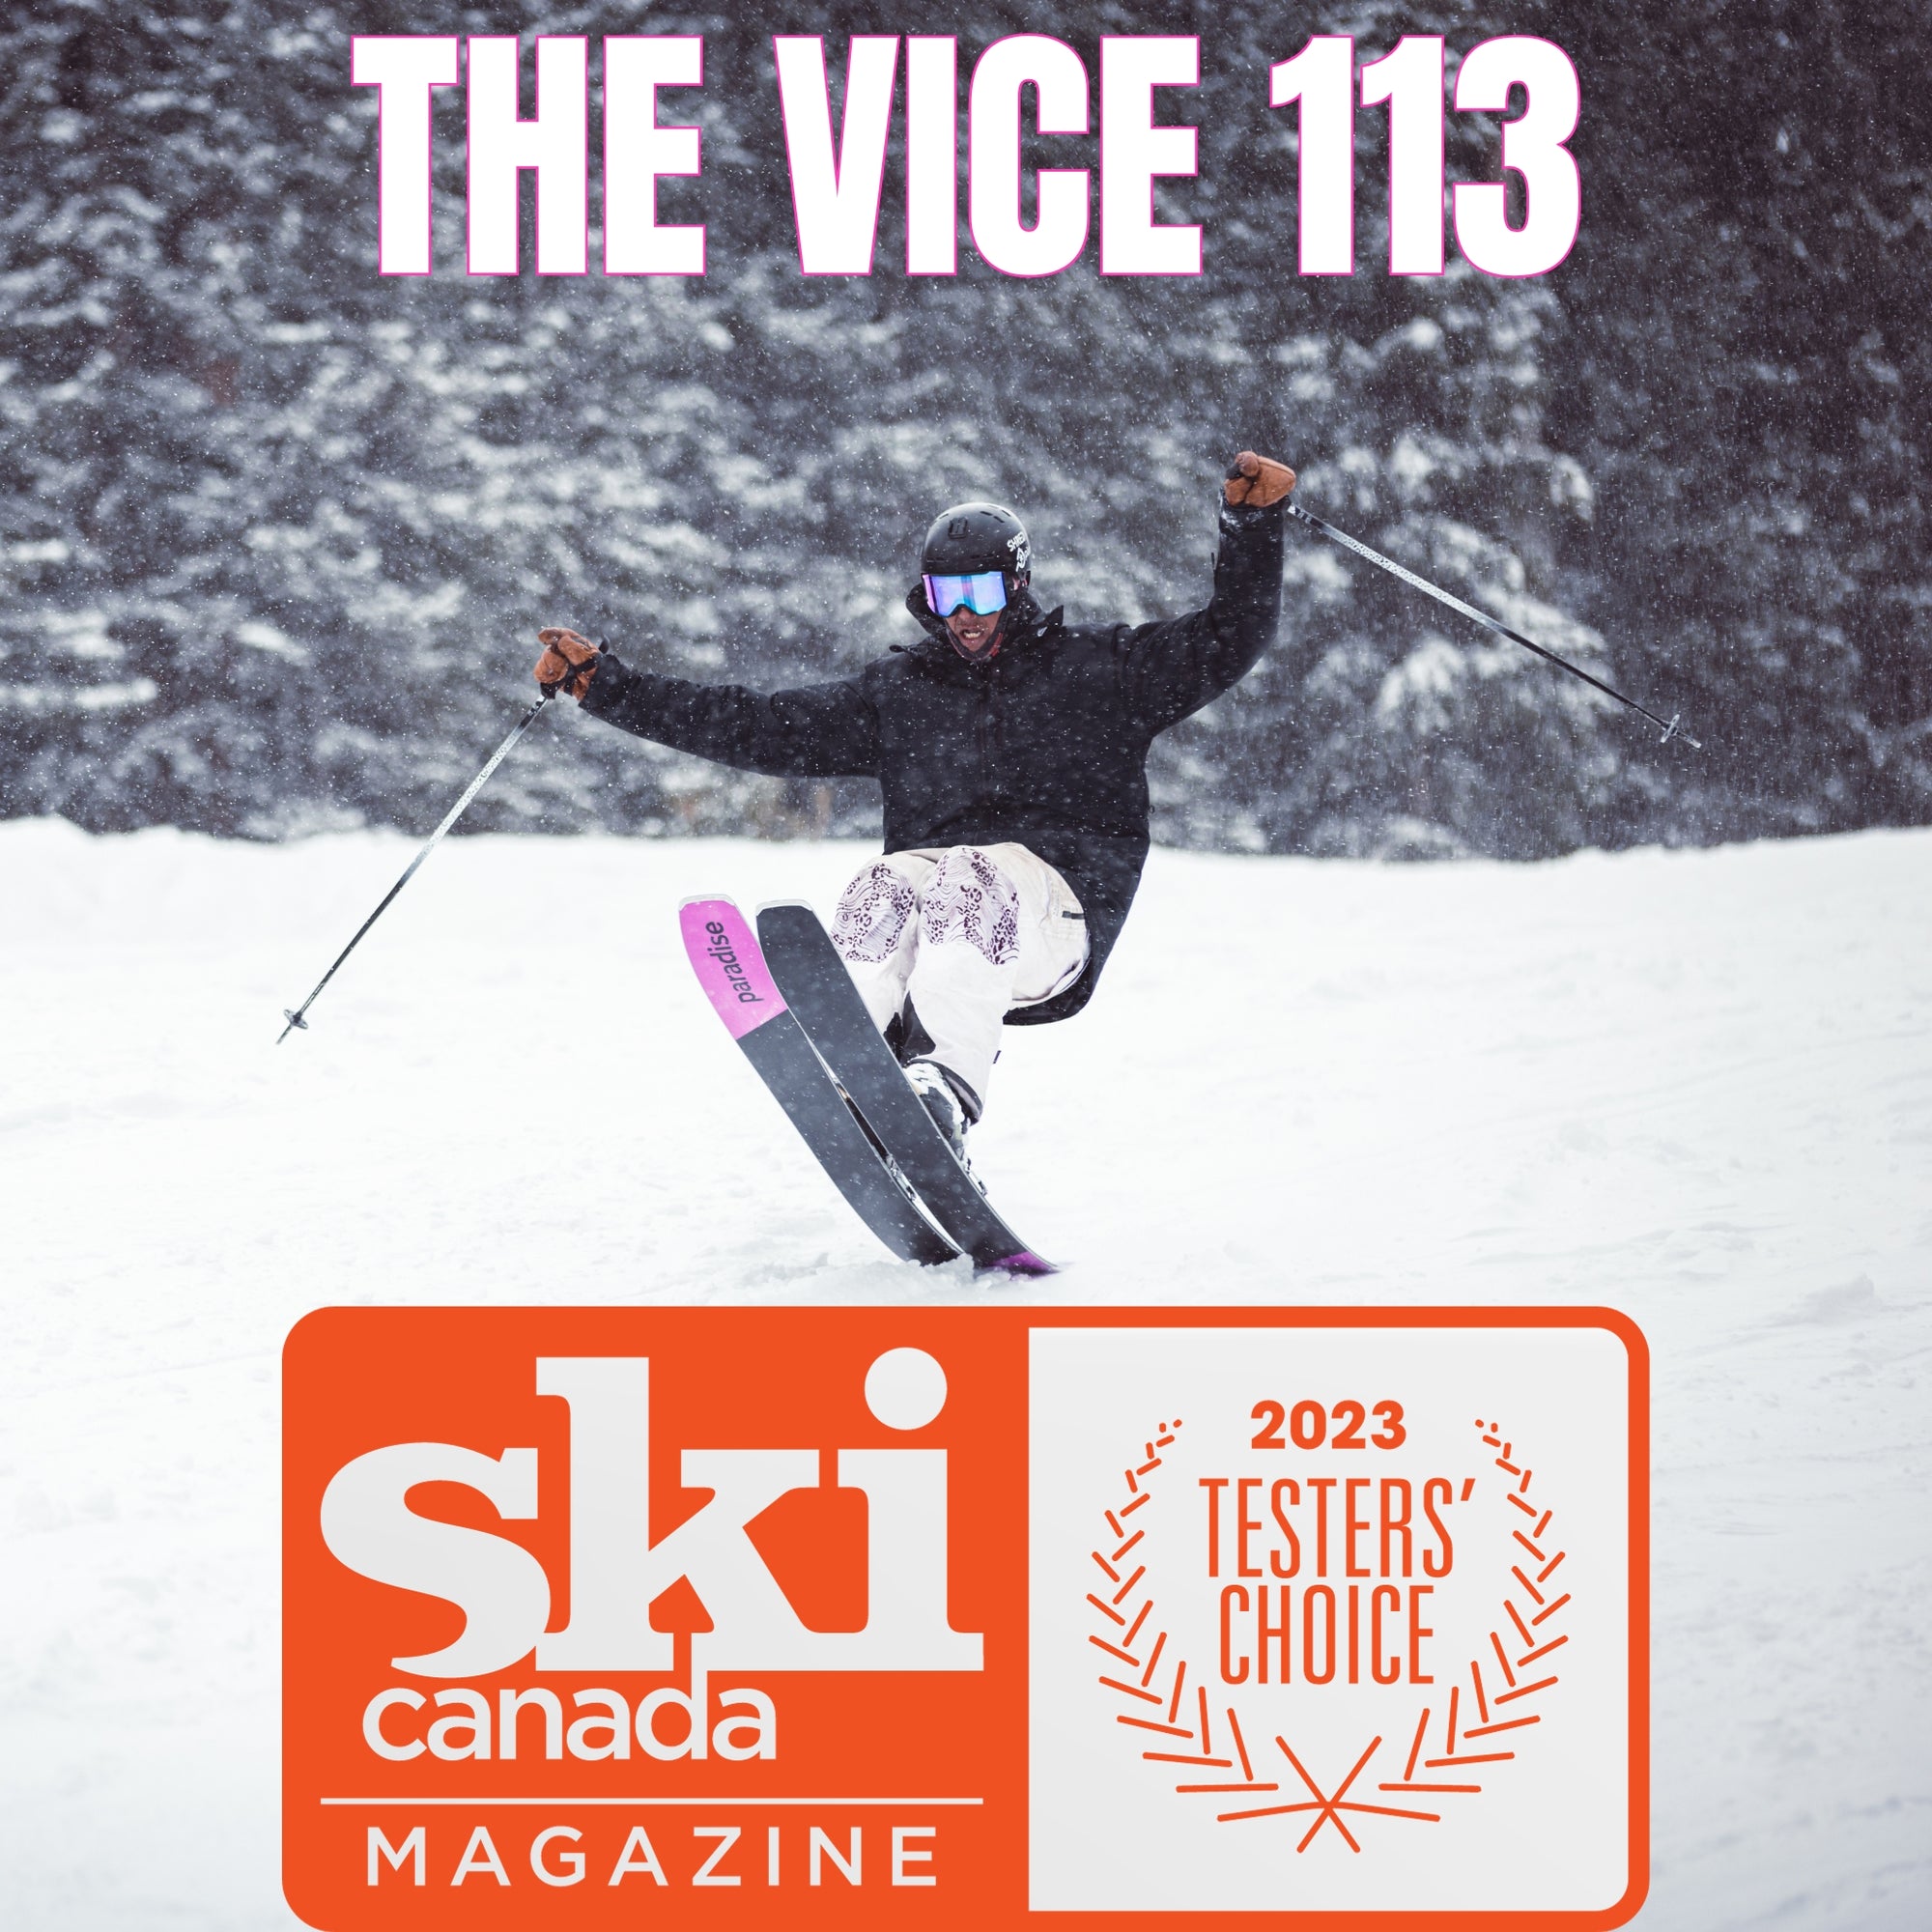 Paradise VICE 113 - Ski Canada Magazine 2023 Ski Testers' Choice Award Winner